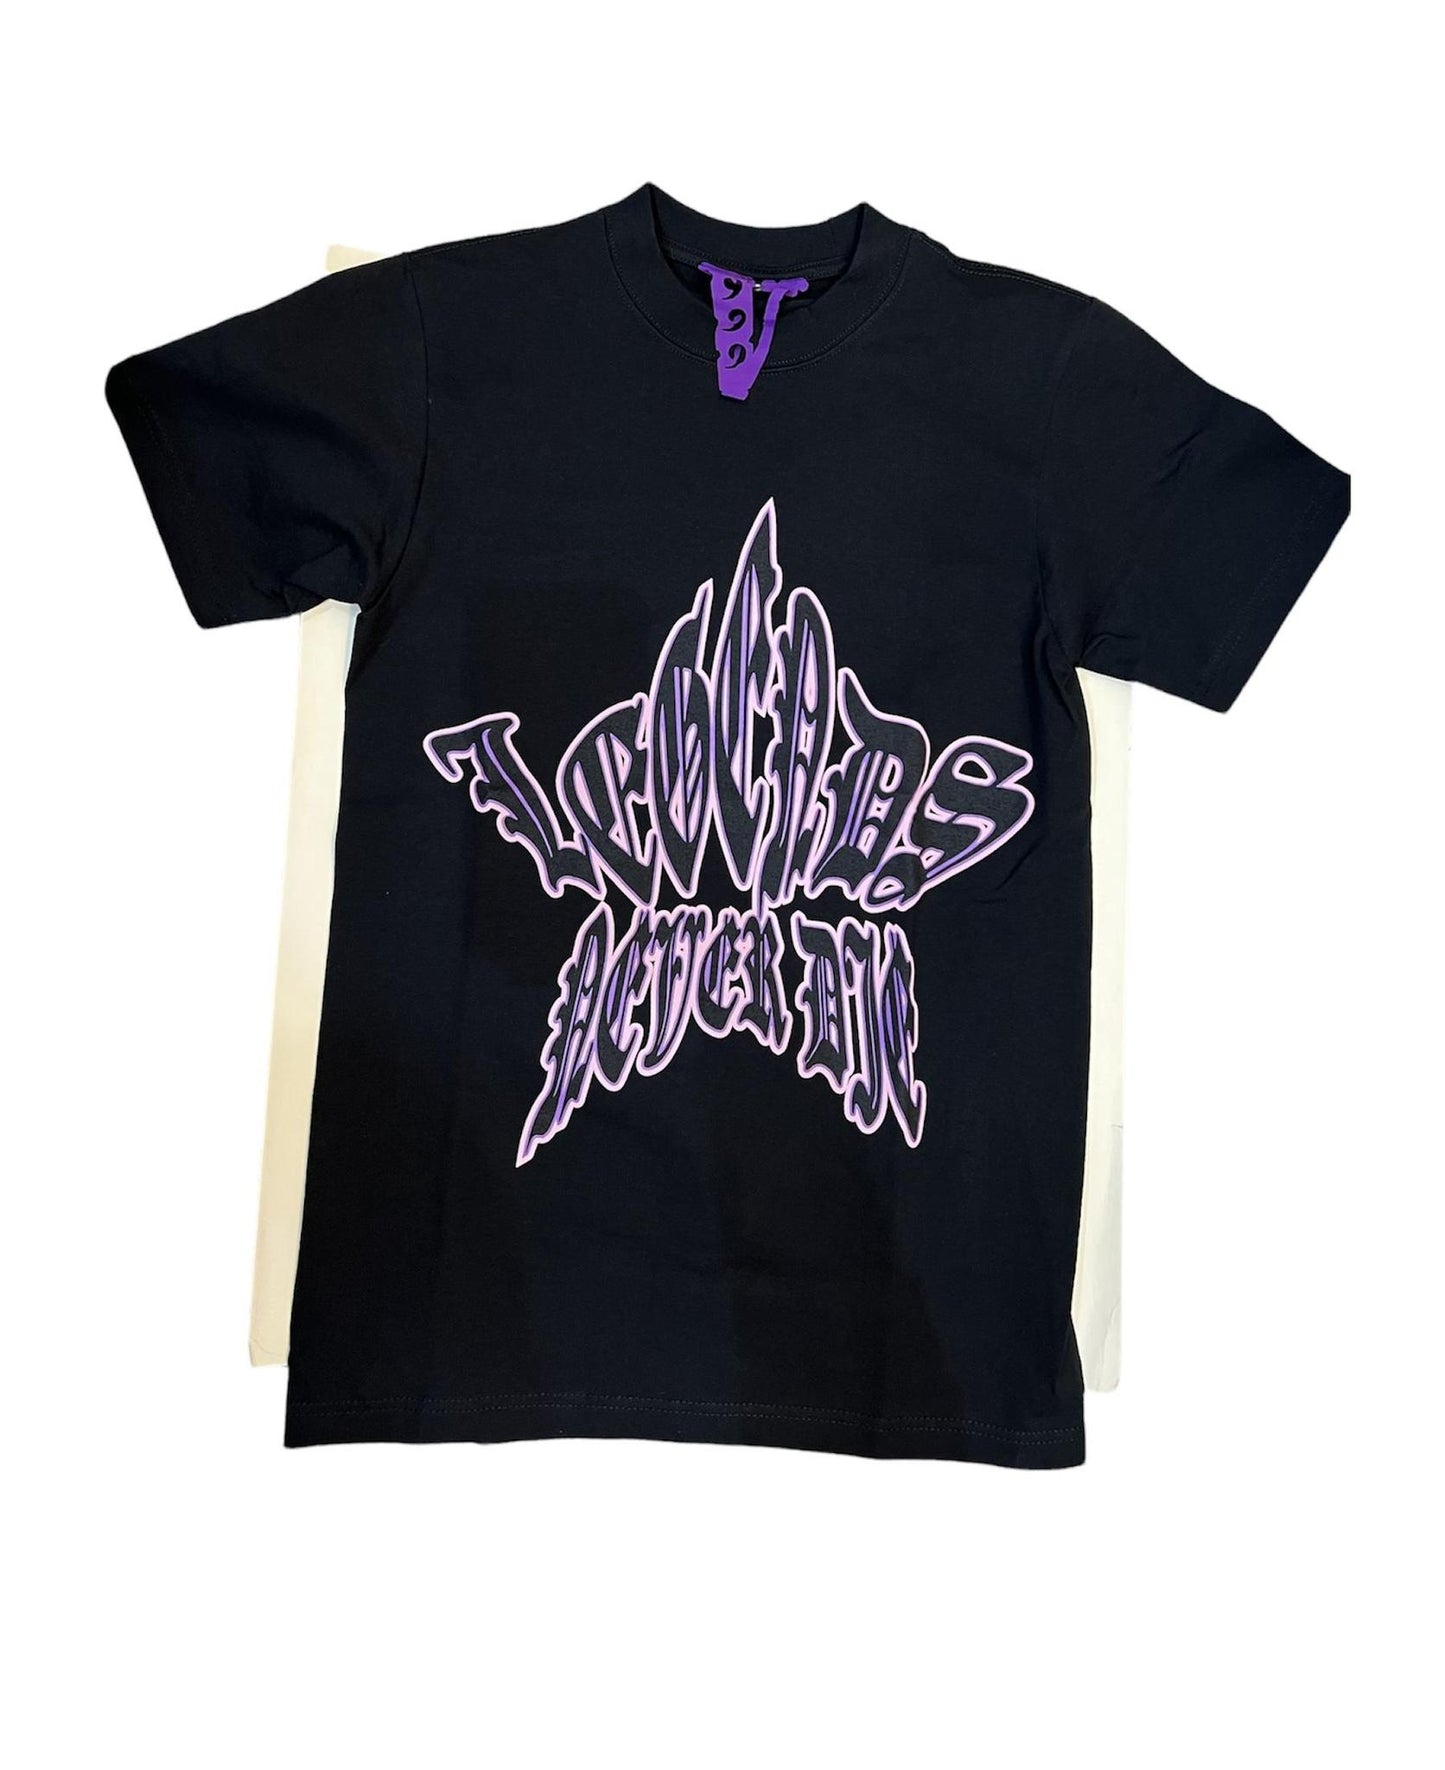 Juice Wrld x Vlone Legend T-Shirt Black